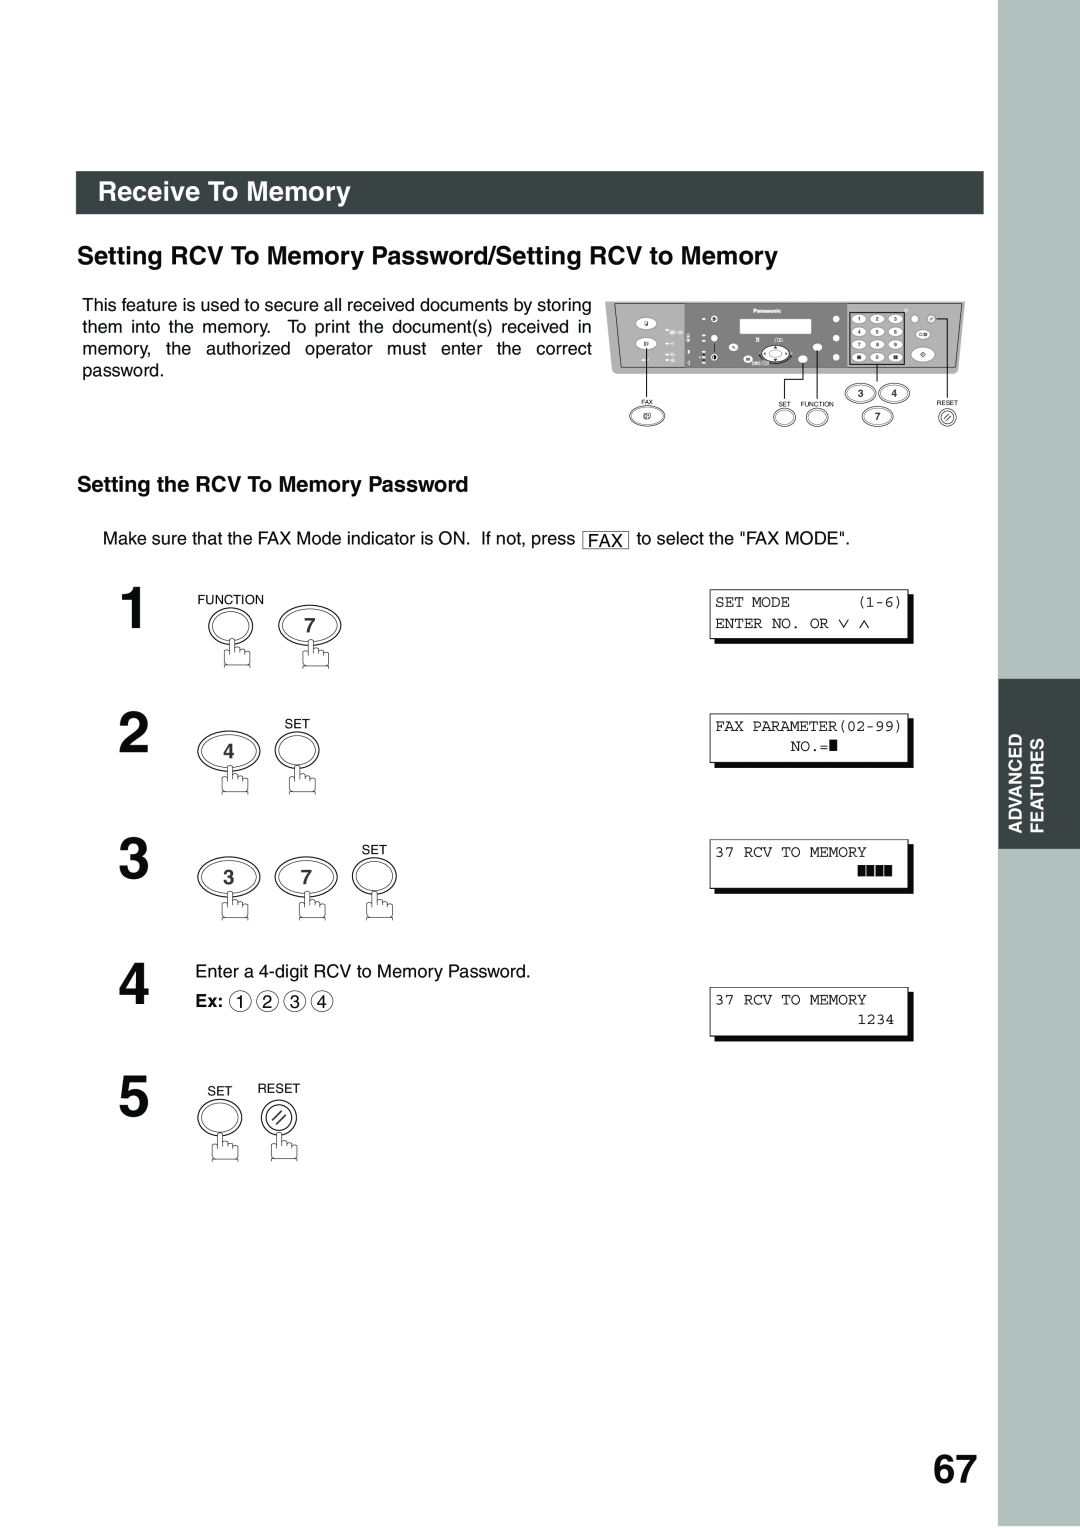 Panasonic DP-135FP appendix Receive To Memory, Setting RCV To Memory Password/Setting RCV to Memory 